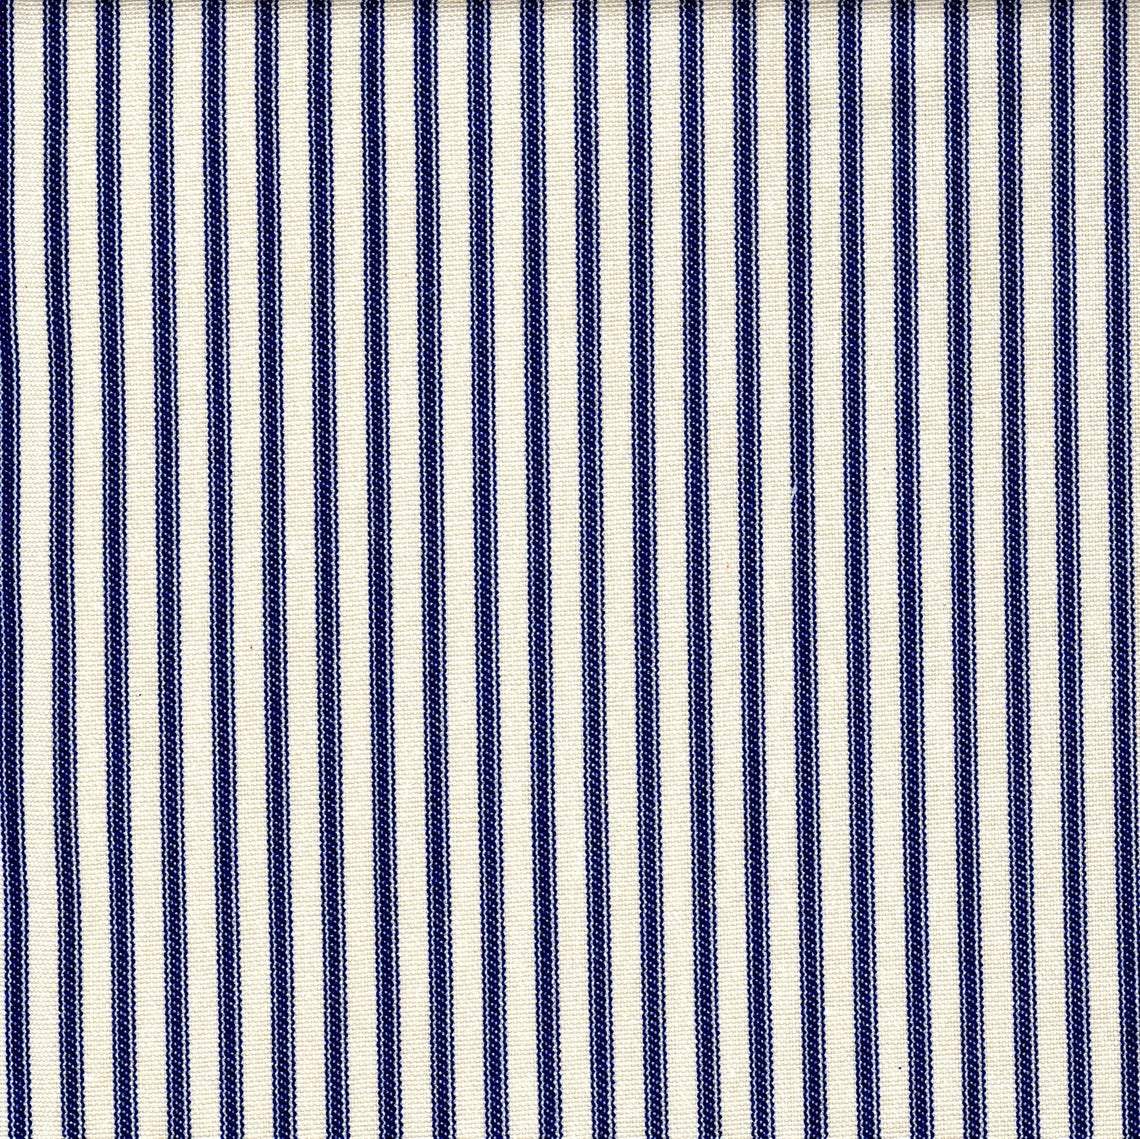 tailored crib skirt in farmhouse dark blue ticking stripe on cream